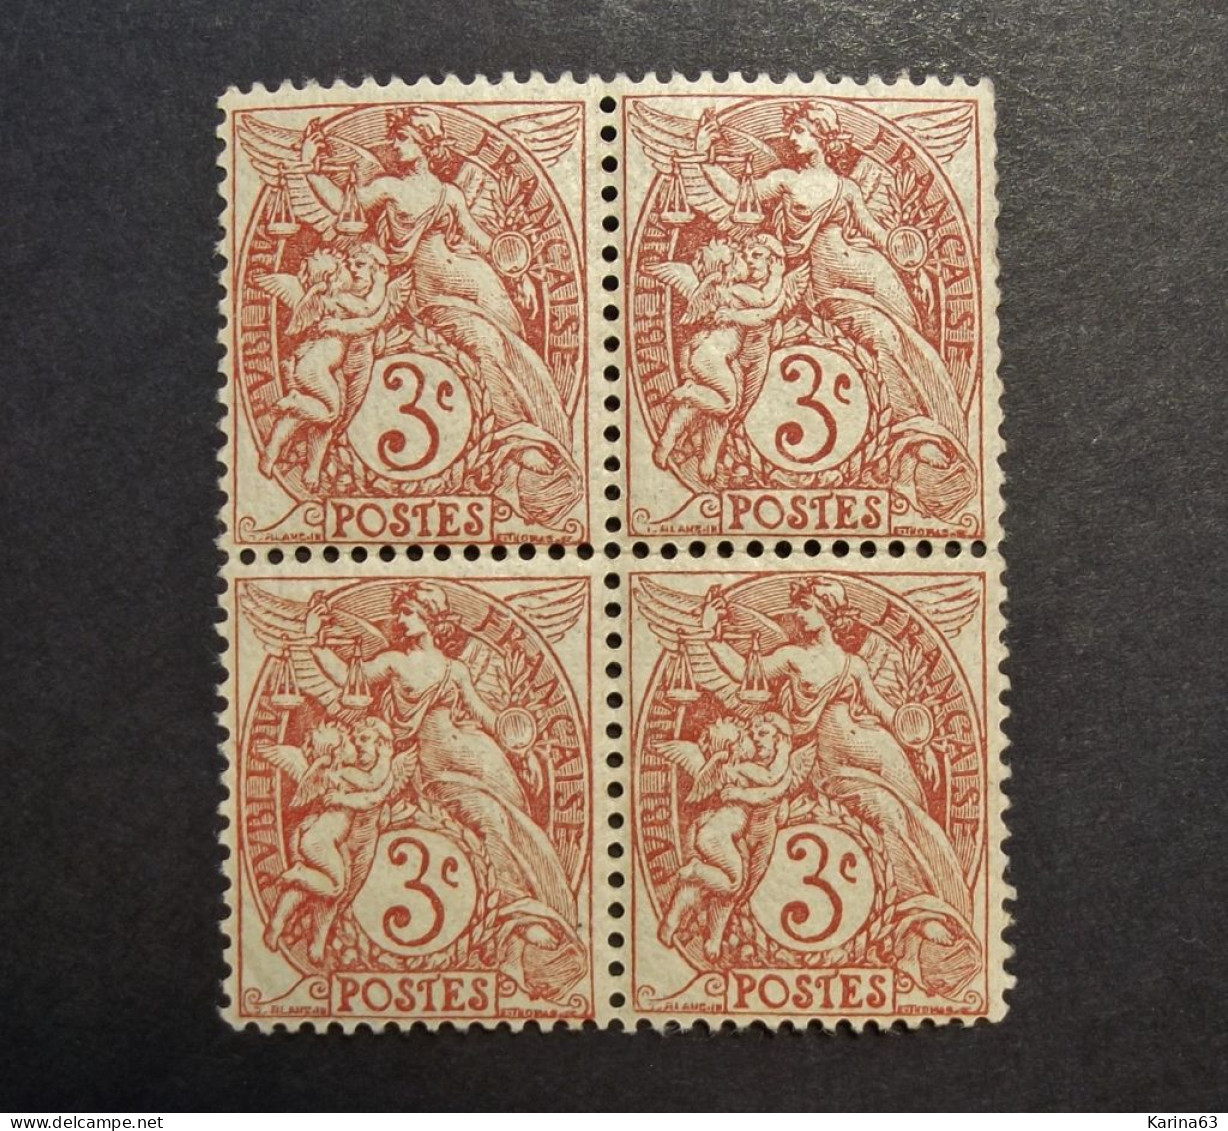 France - Frankrijk - Blanc - 1900 - 29 - 4 bloc de 4 timbres - N° 107 - 107a - N°108 - N° 109  - Neuf - MNH